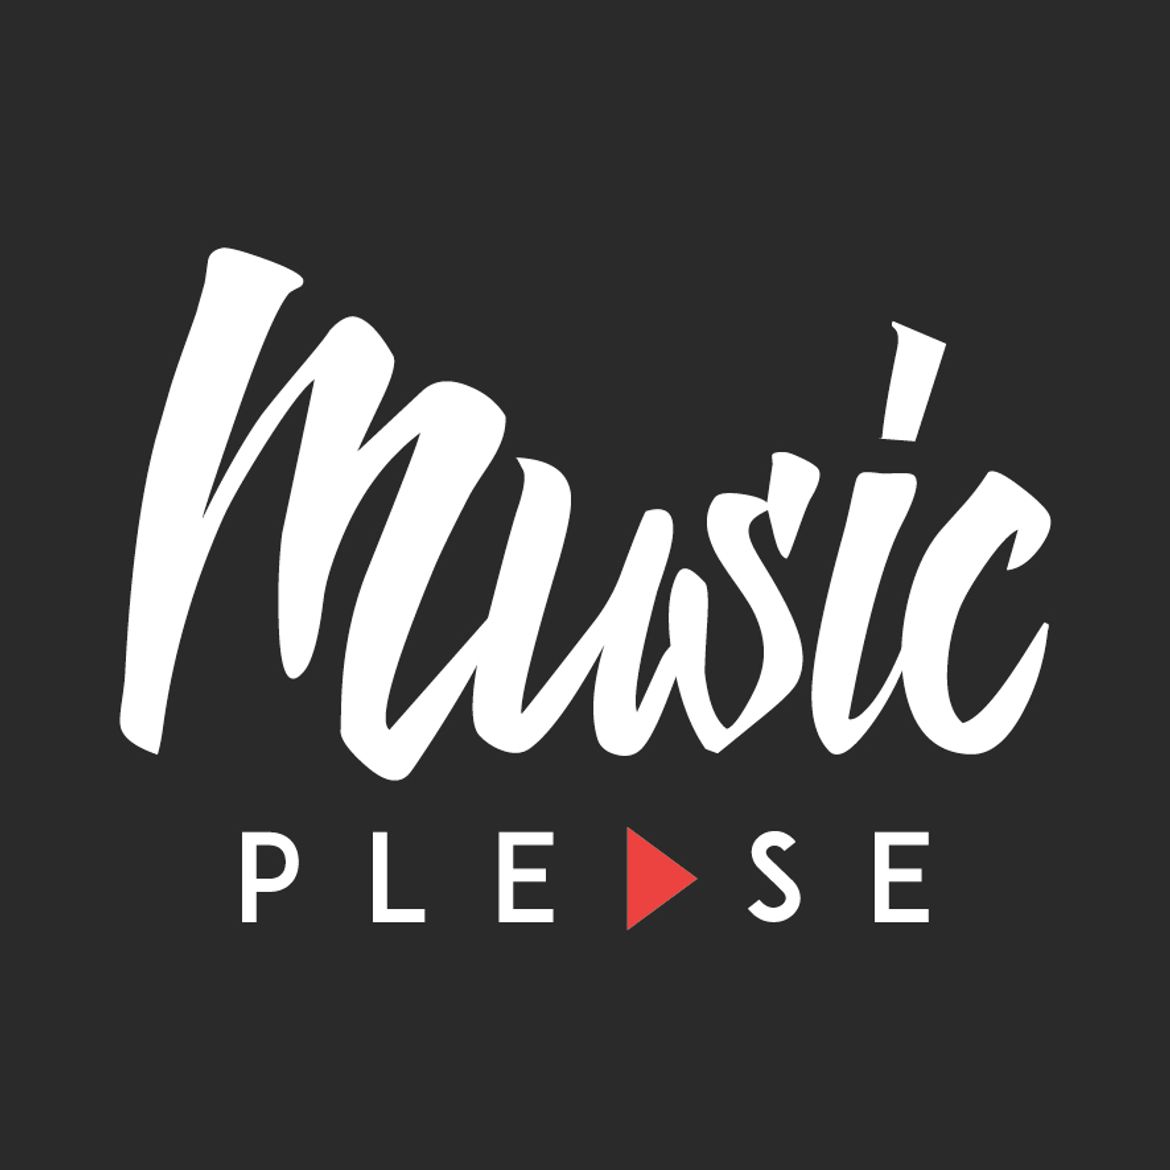 Музыку please. Music please.